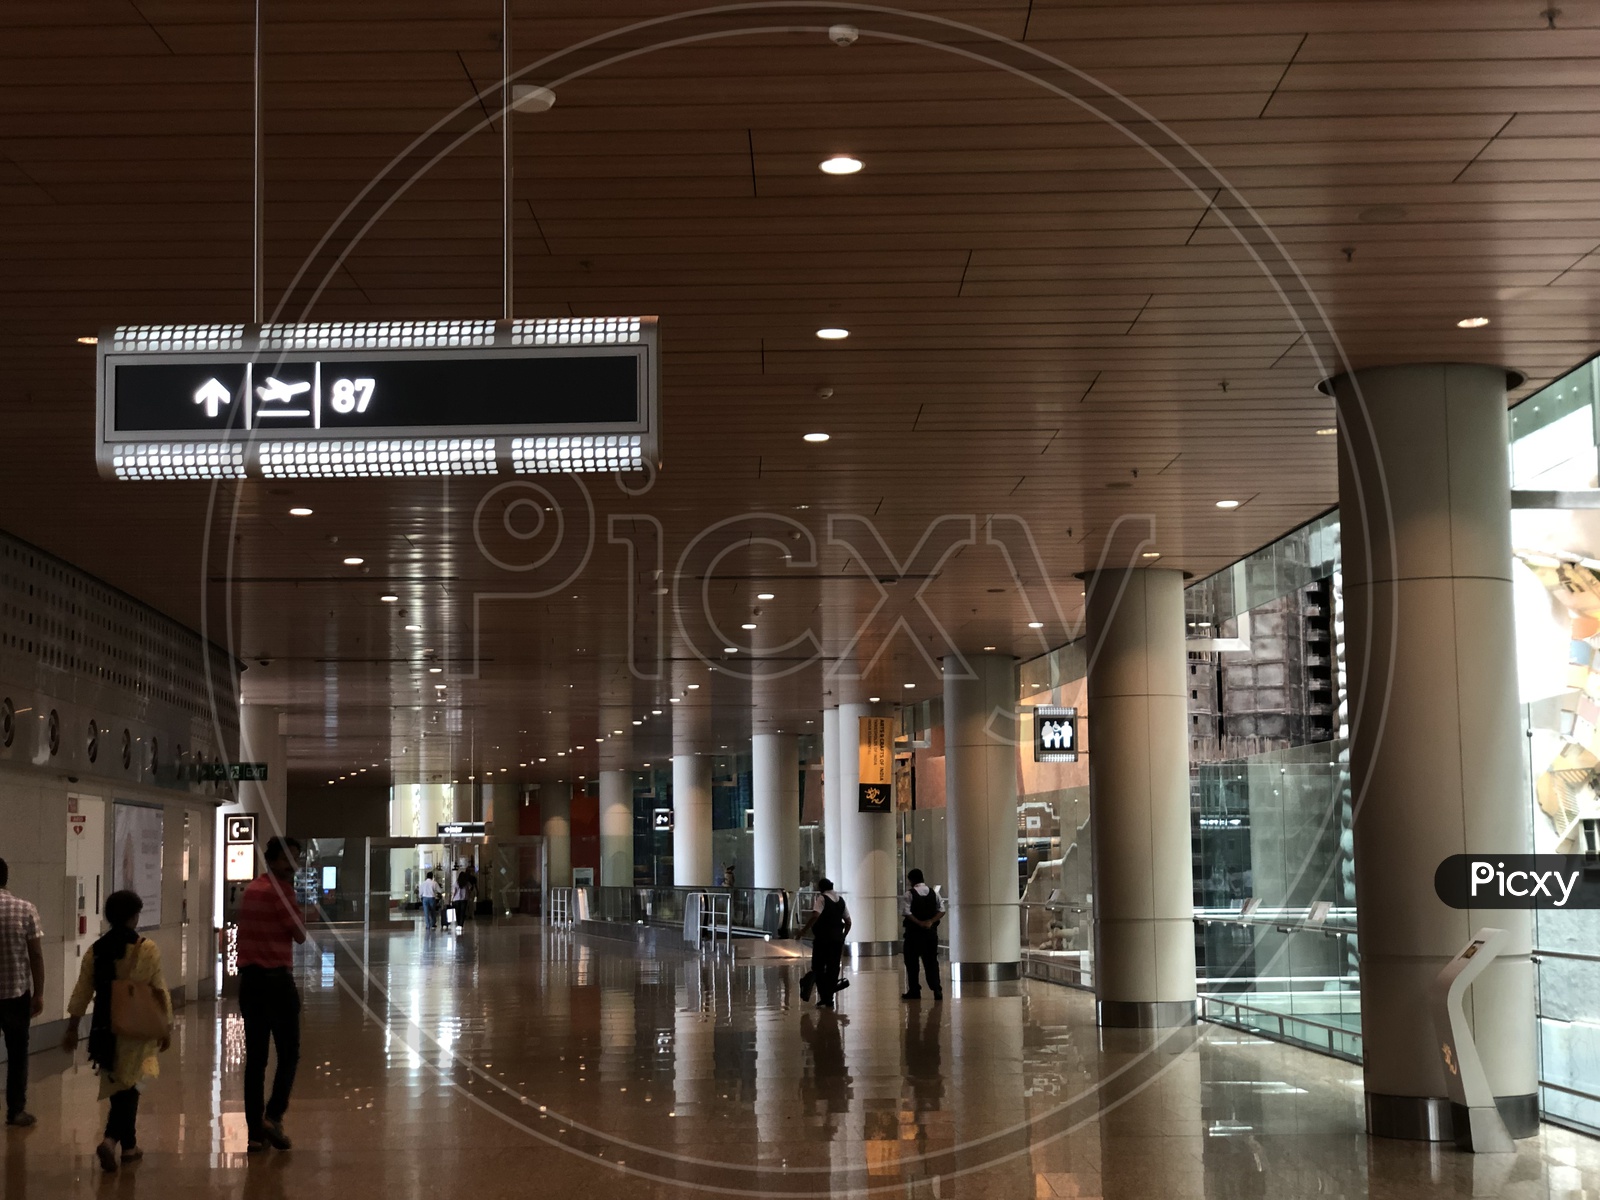 A Corridor With Passengers in Terminal 2 of Mumbai Airport